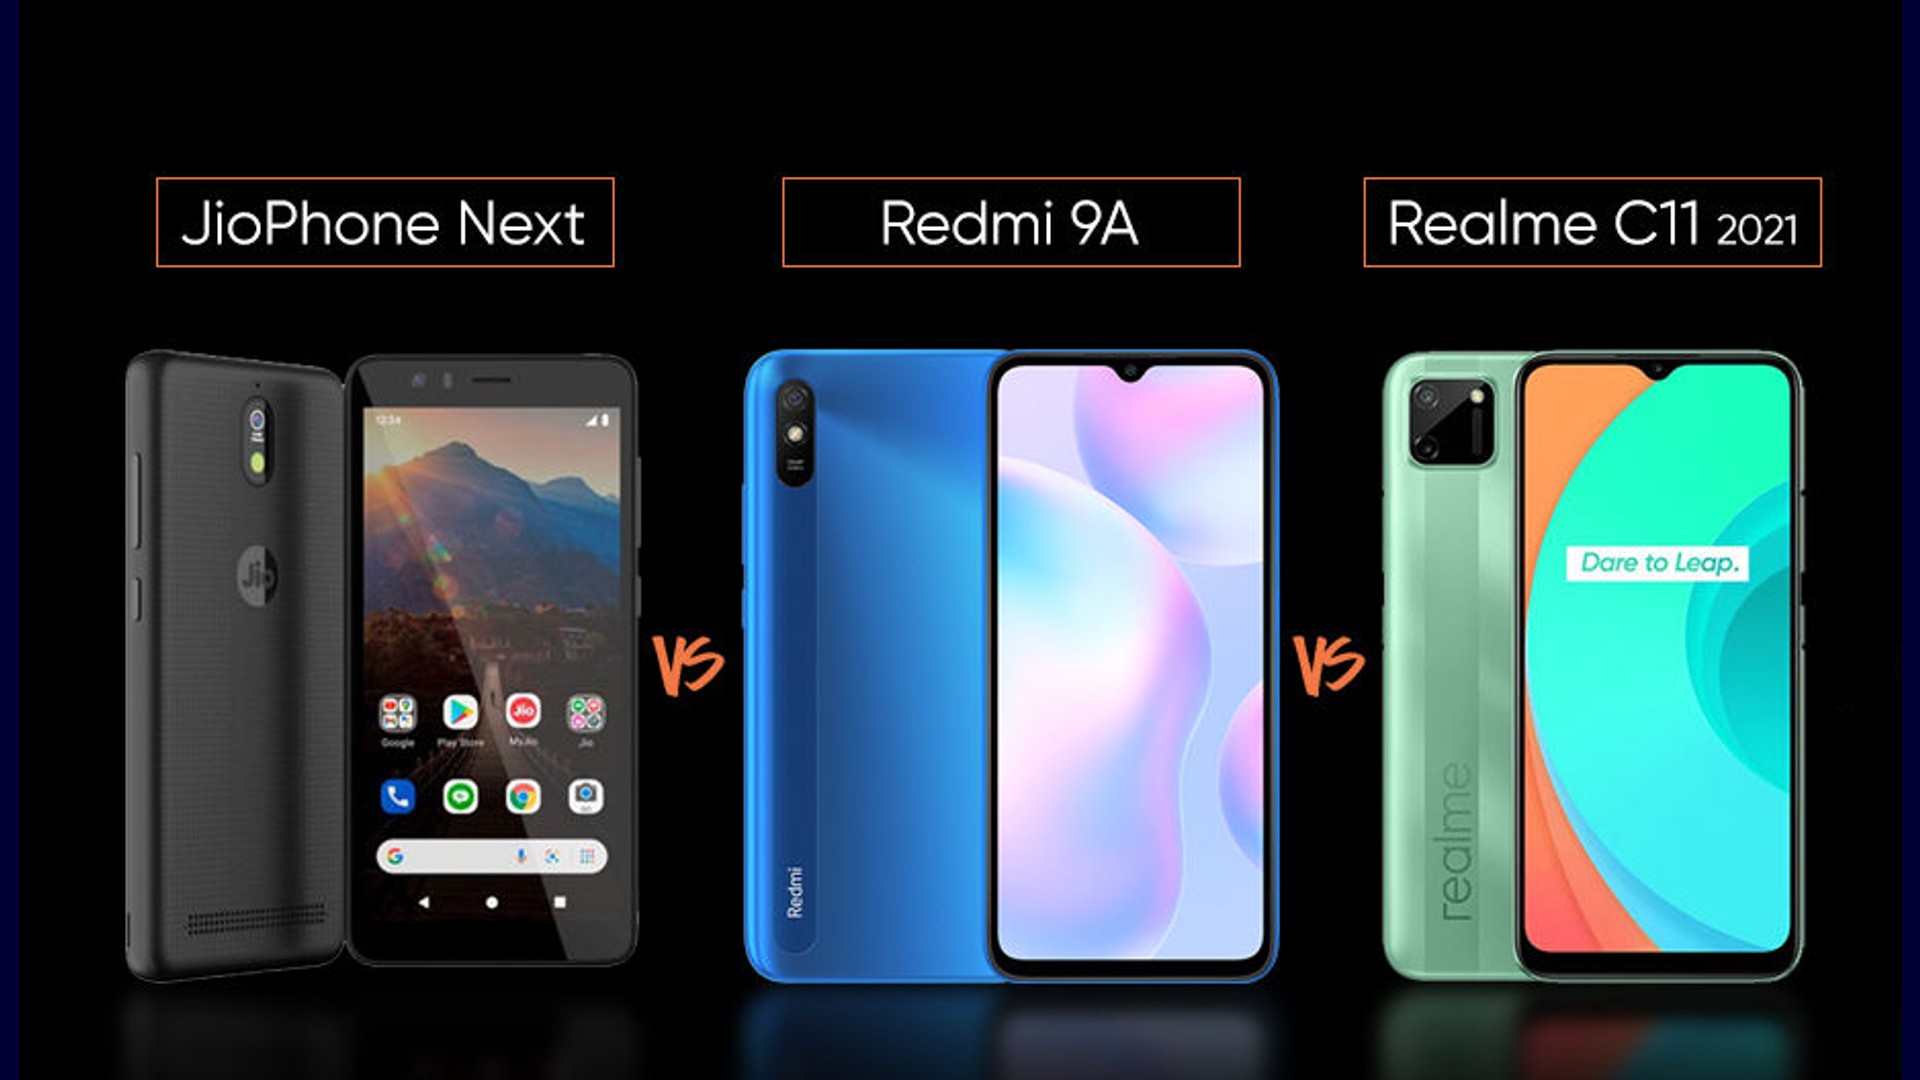 JioPhone Next, Redmi 9A, Realmec11